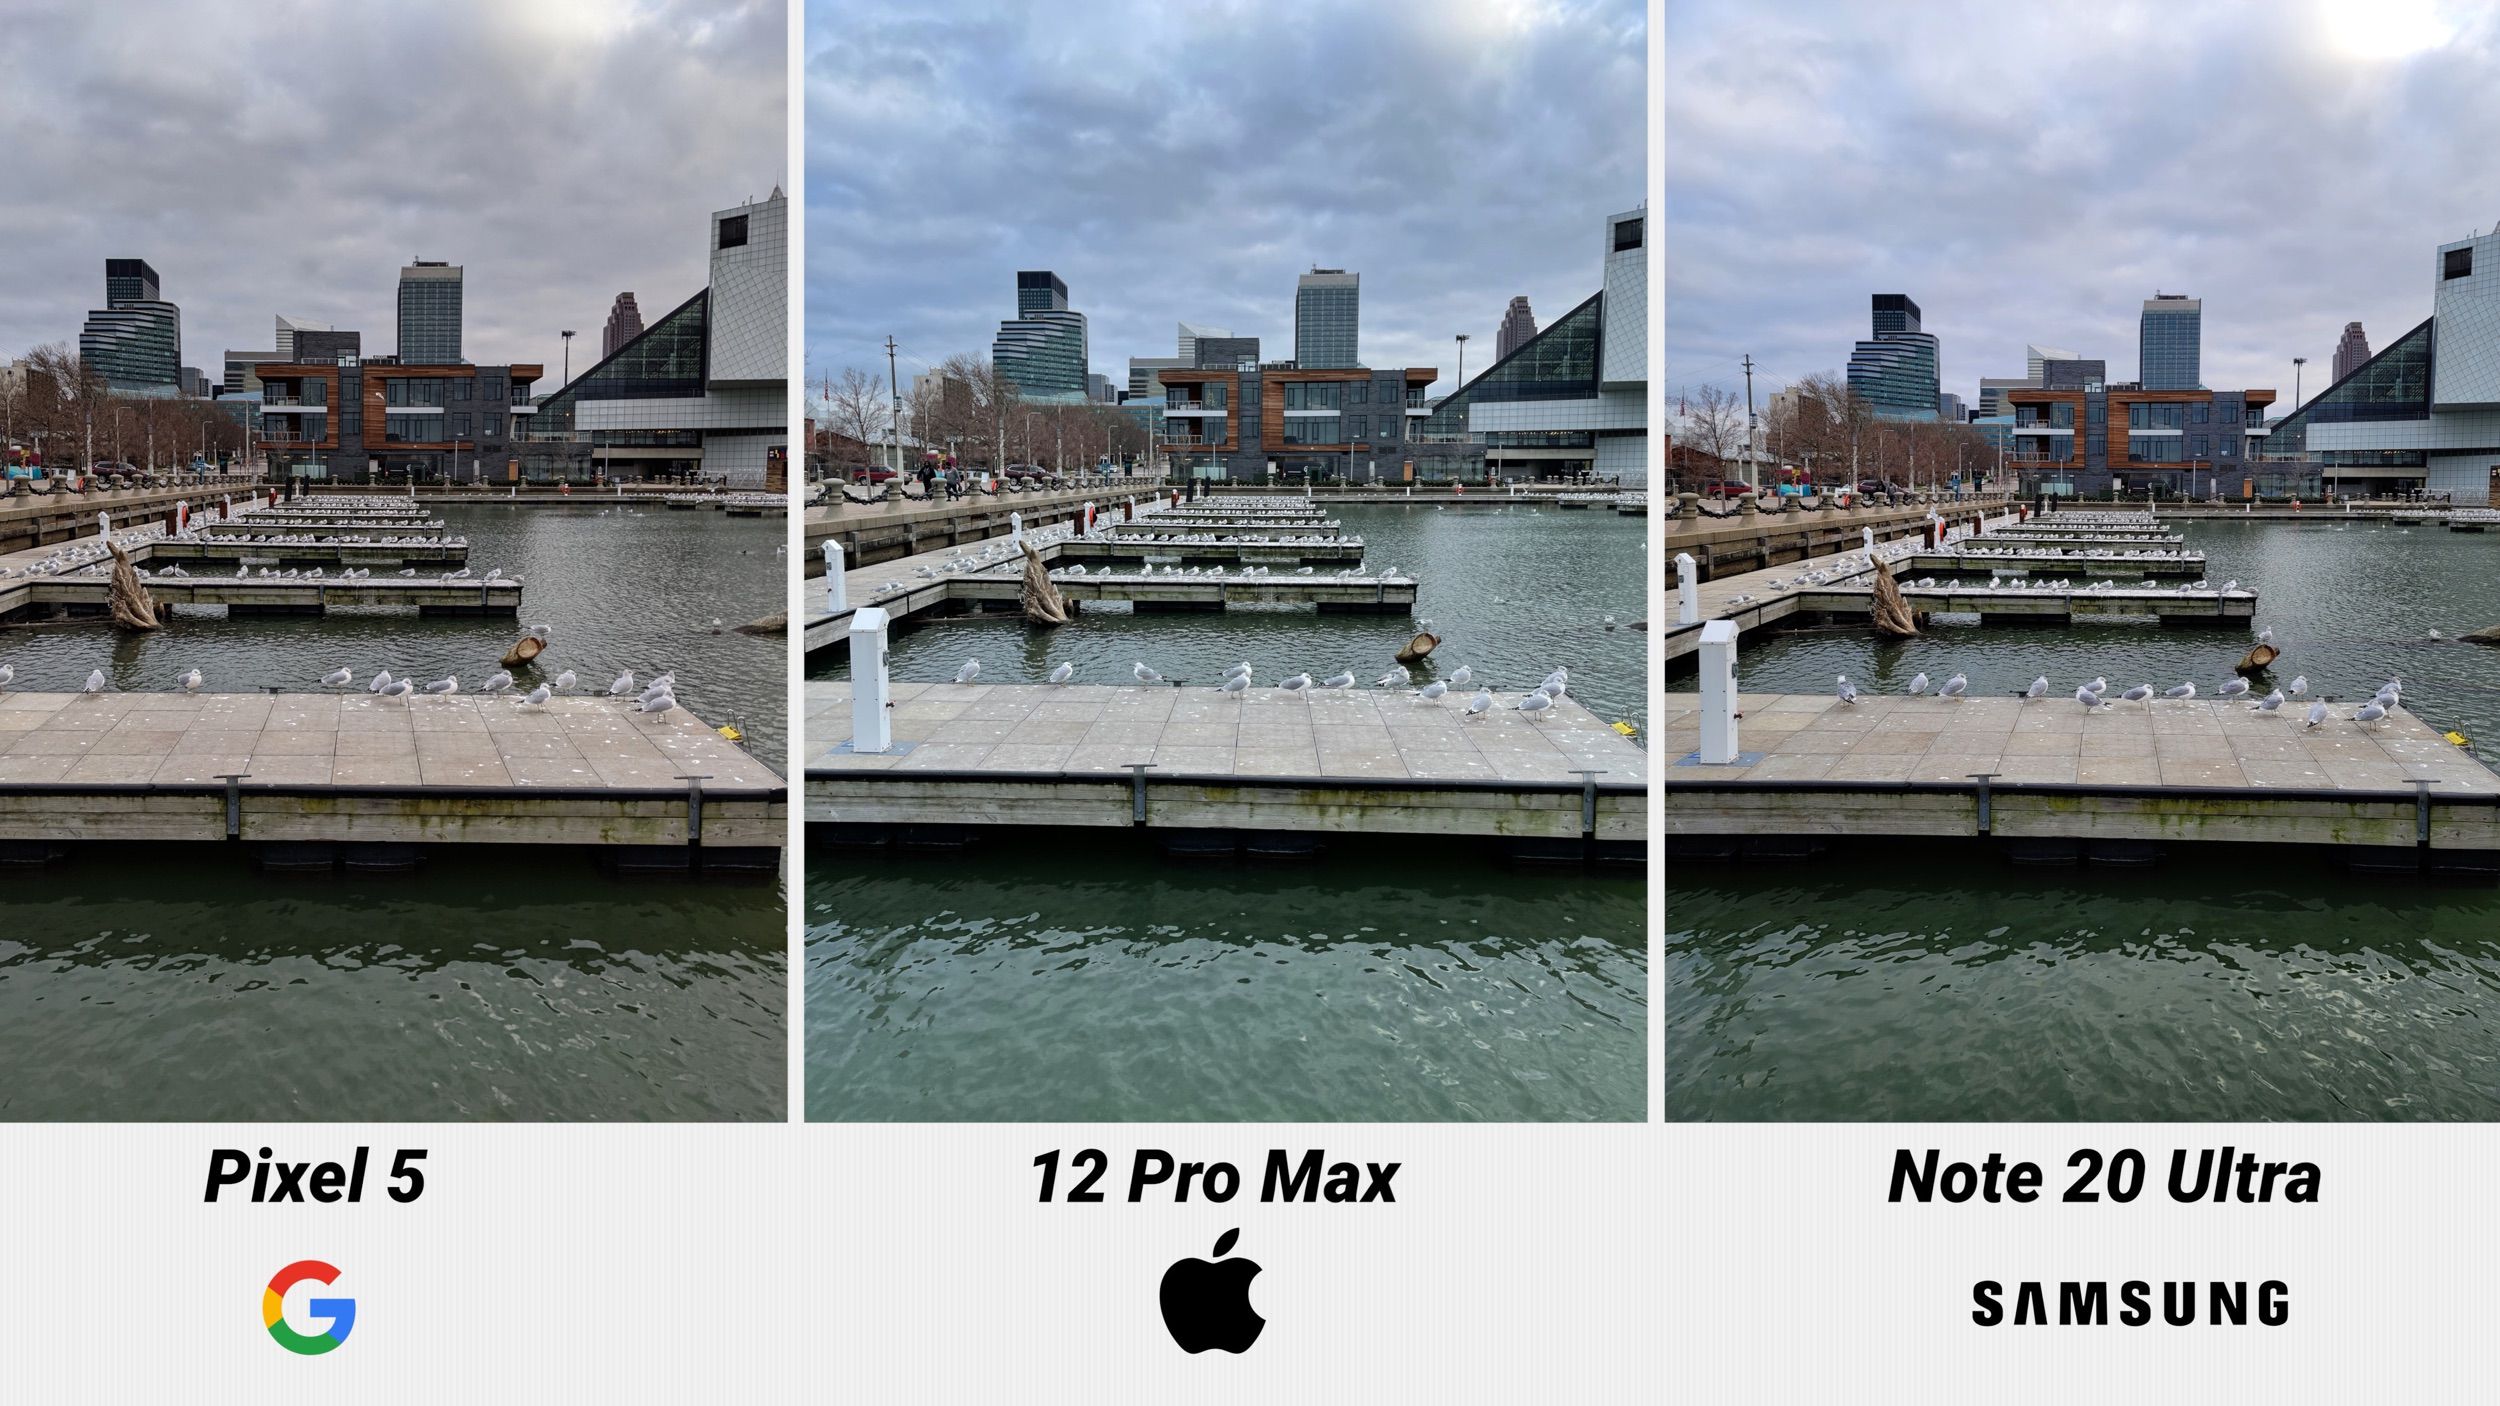 مقایسه دوربین های آیفون12 پرومکس،گوگل پیکسل 5 و سامسونگ گلکسی نوت 20 اولترا